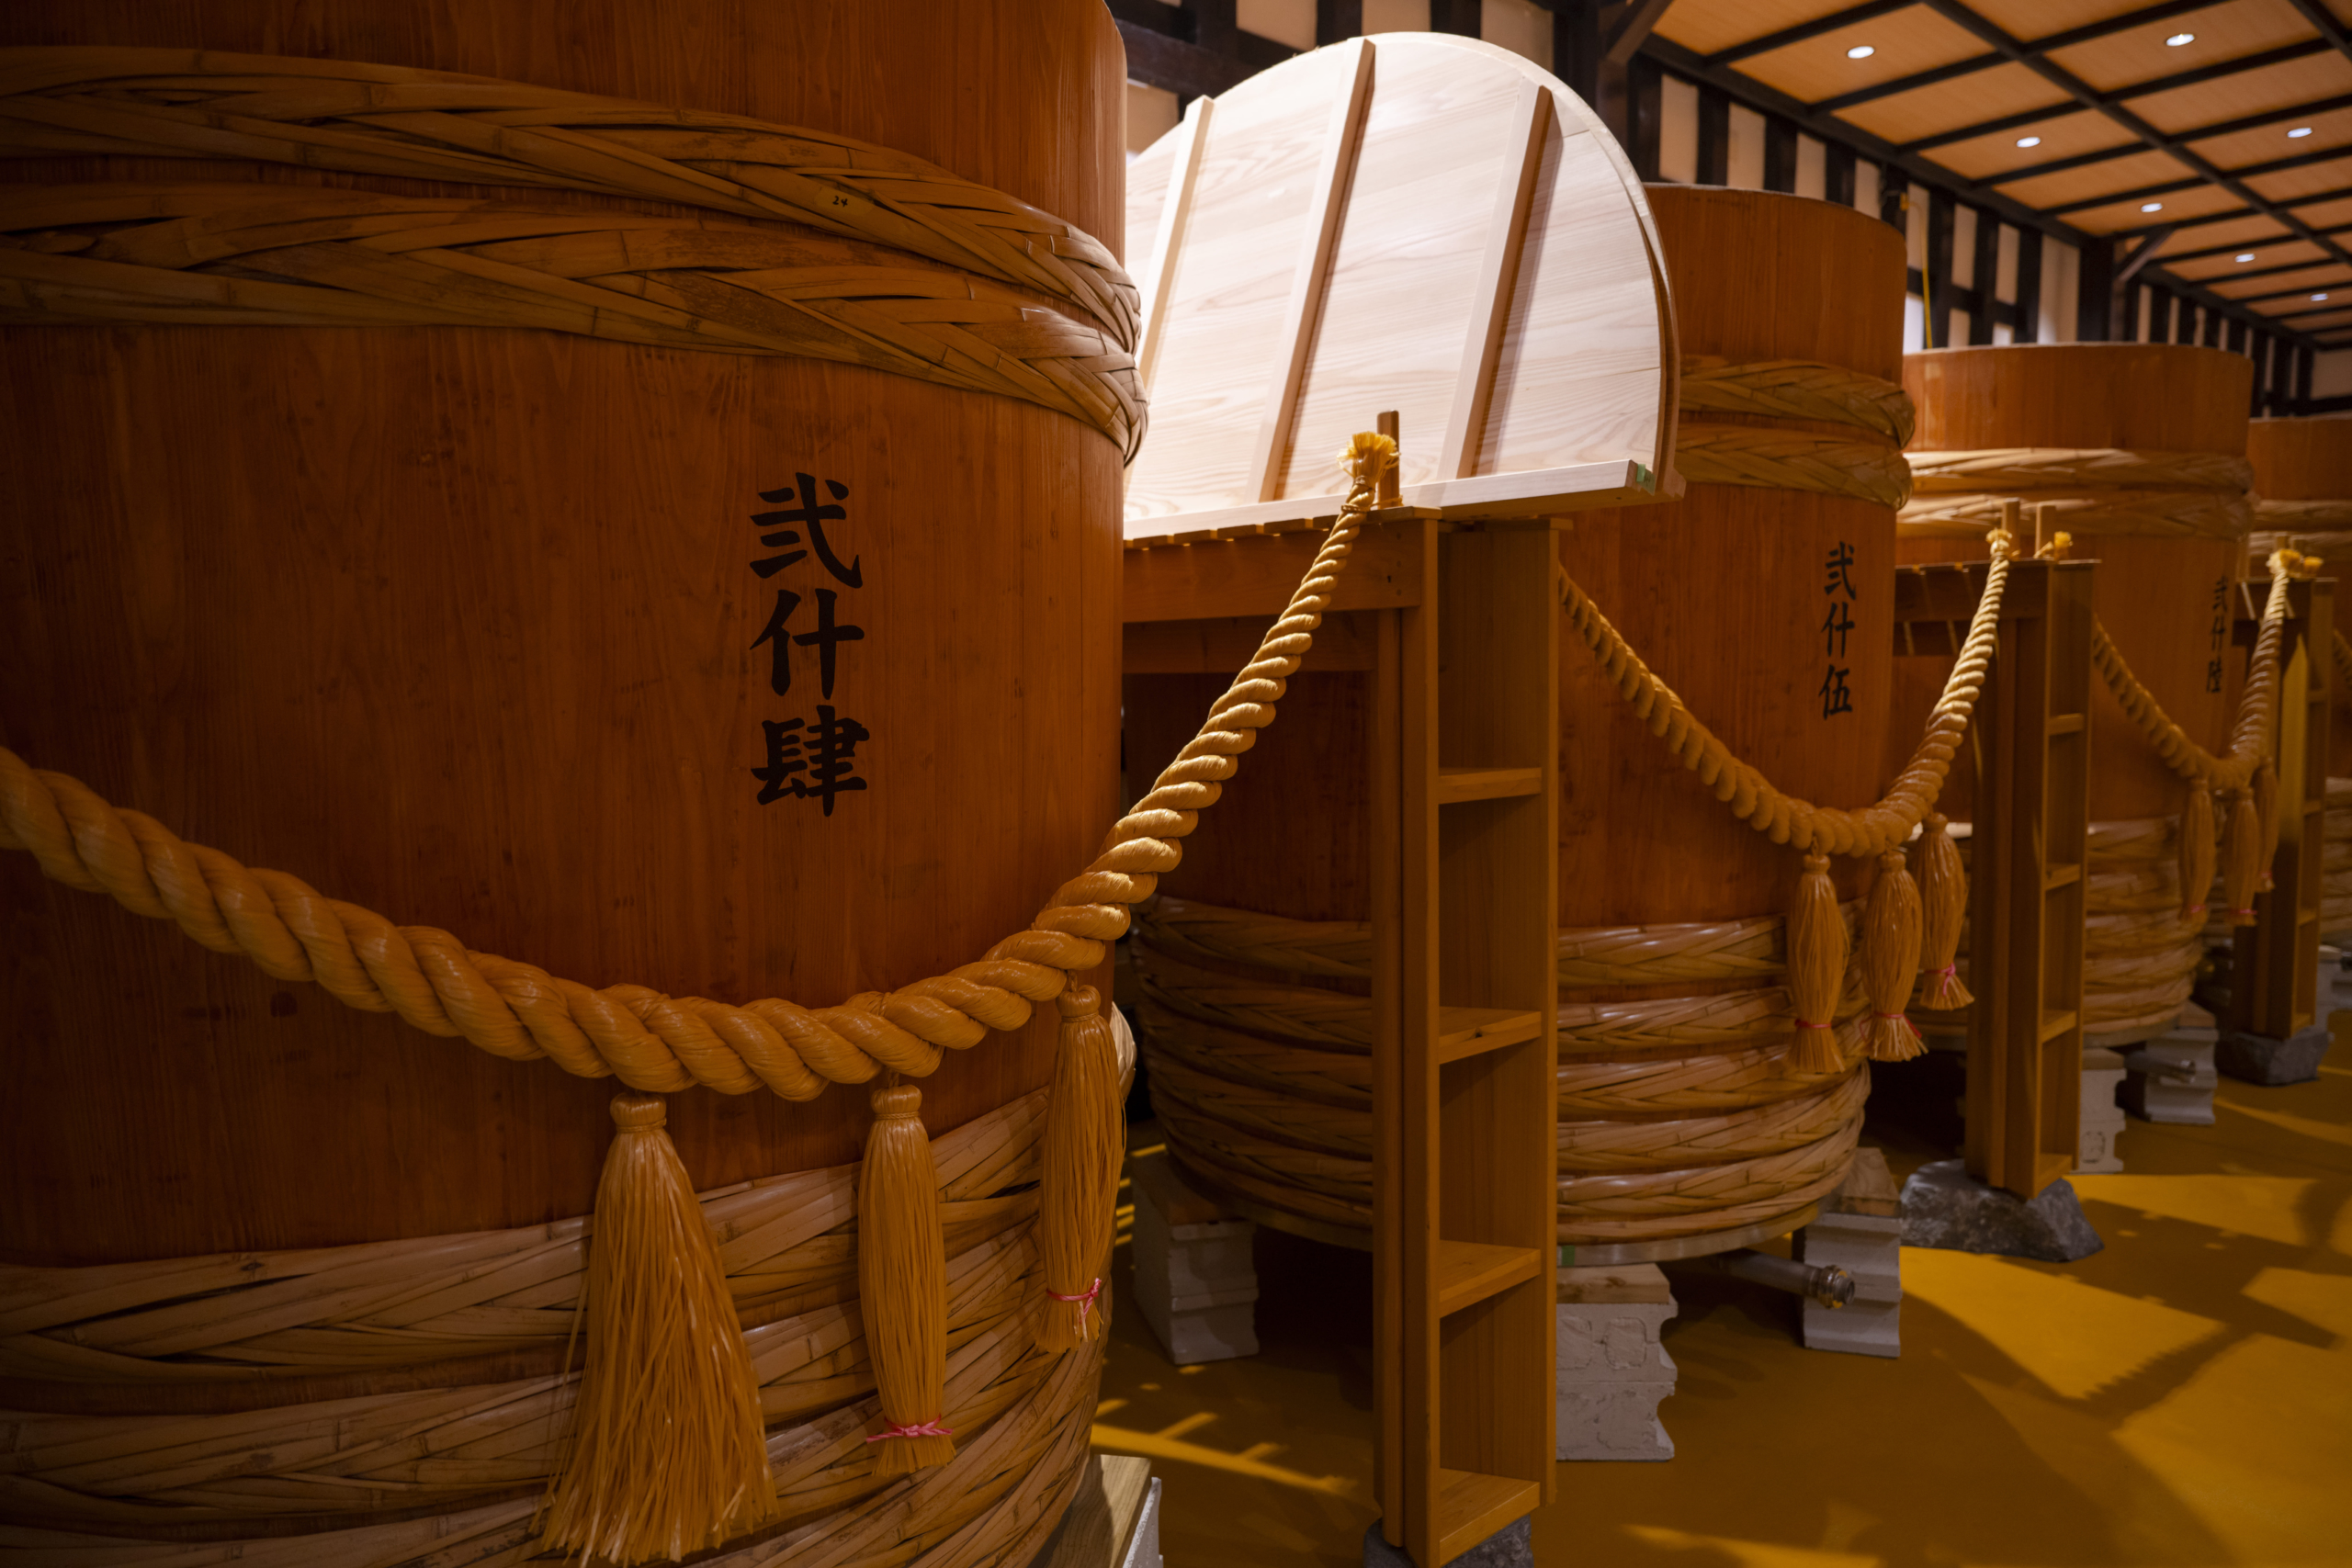 Aramasa Sake Brewery, a sake brewed by tradition and innovation